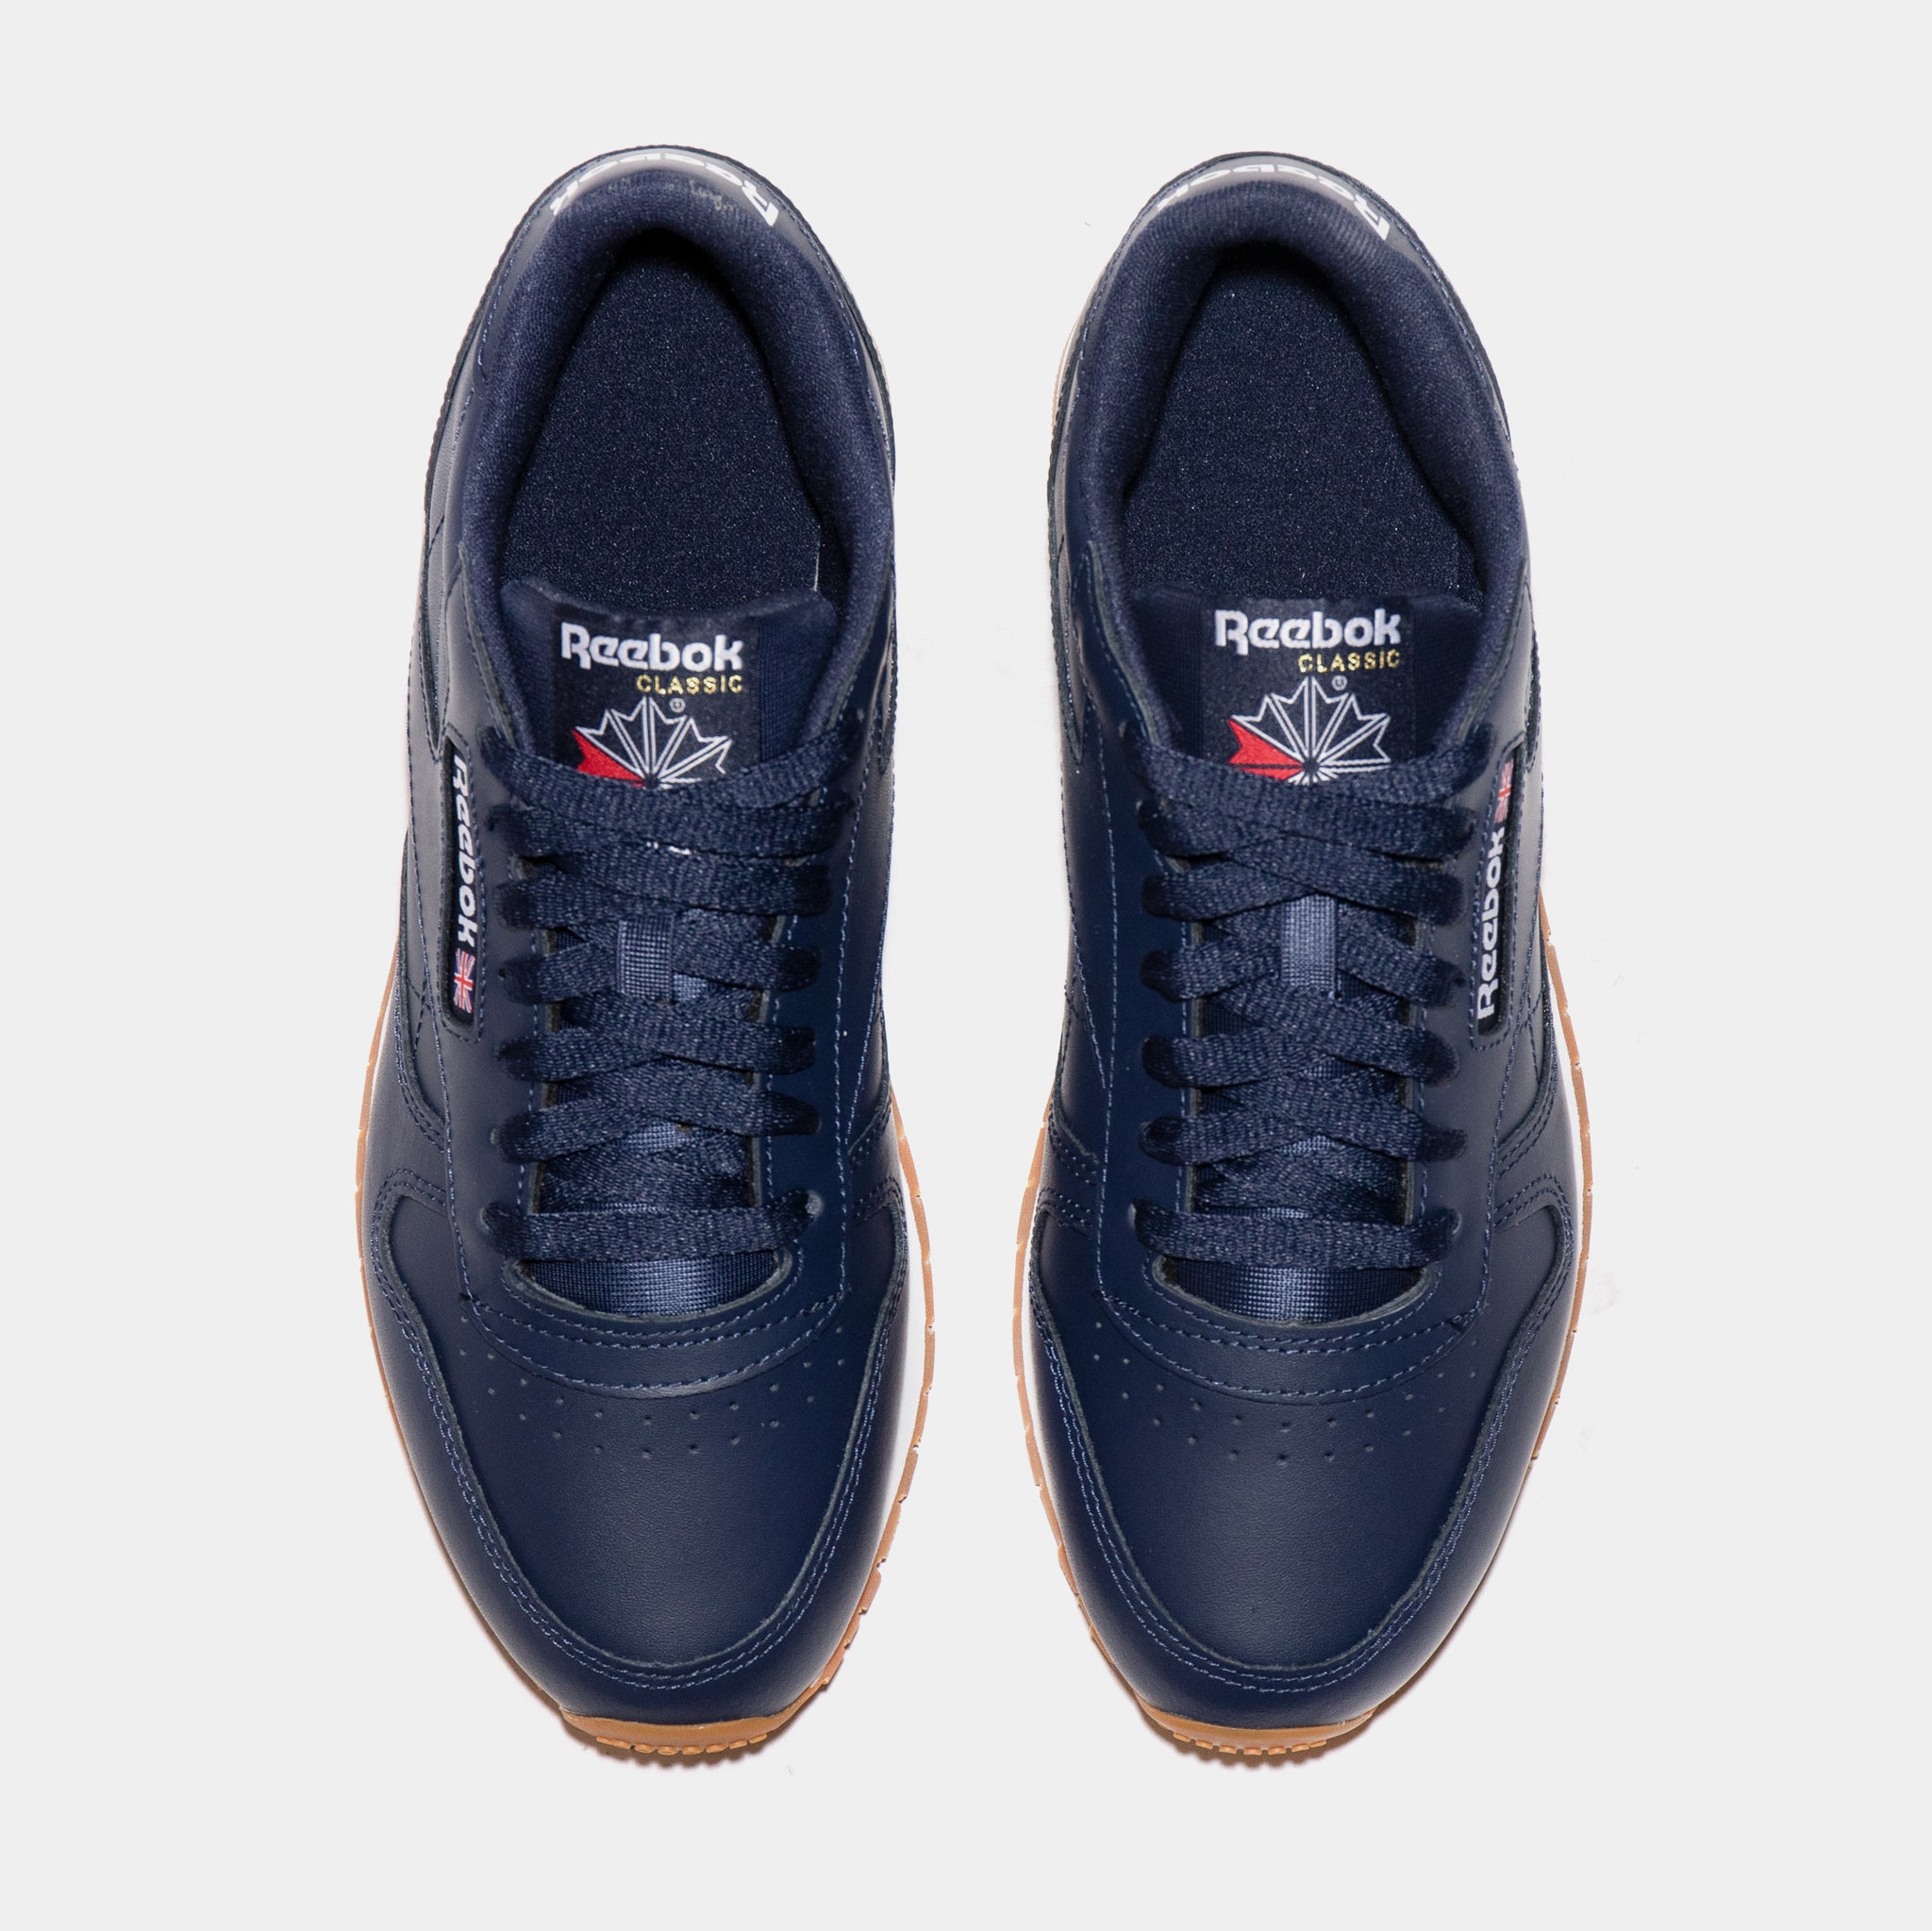 Reebok Classic Leather Lifestyle Shoes Navy Blue Shoe Palace